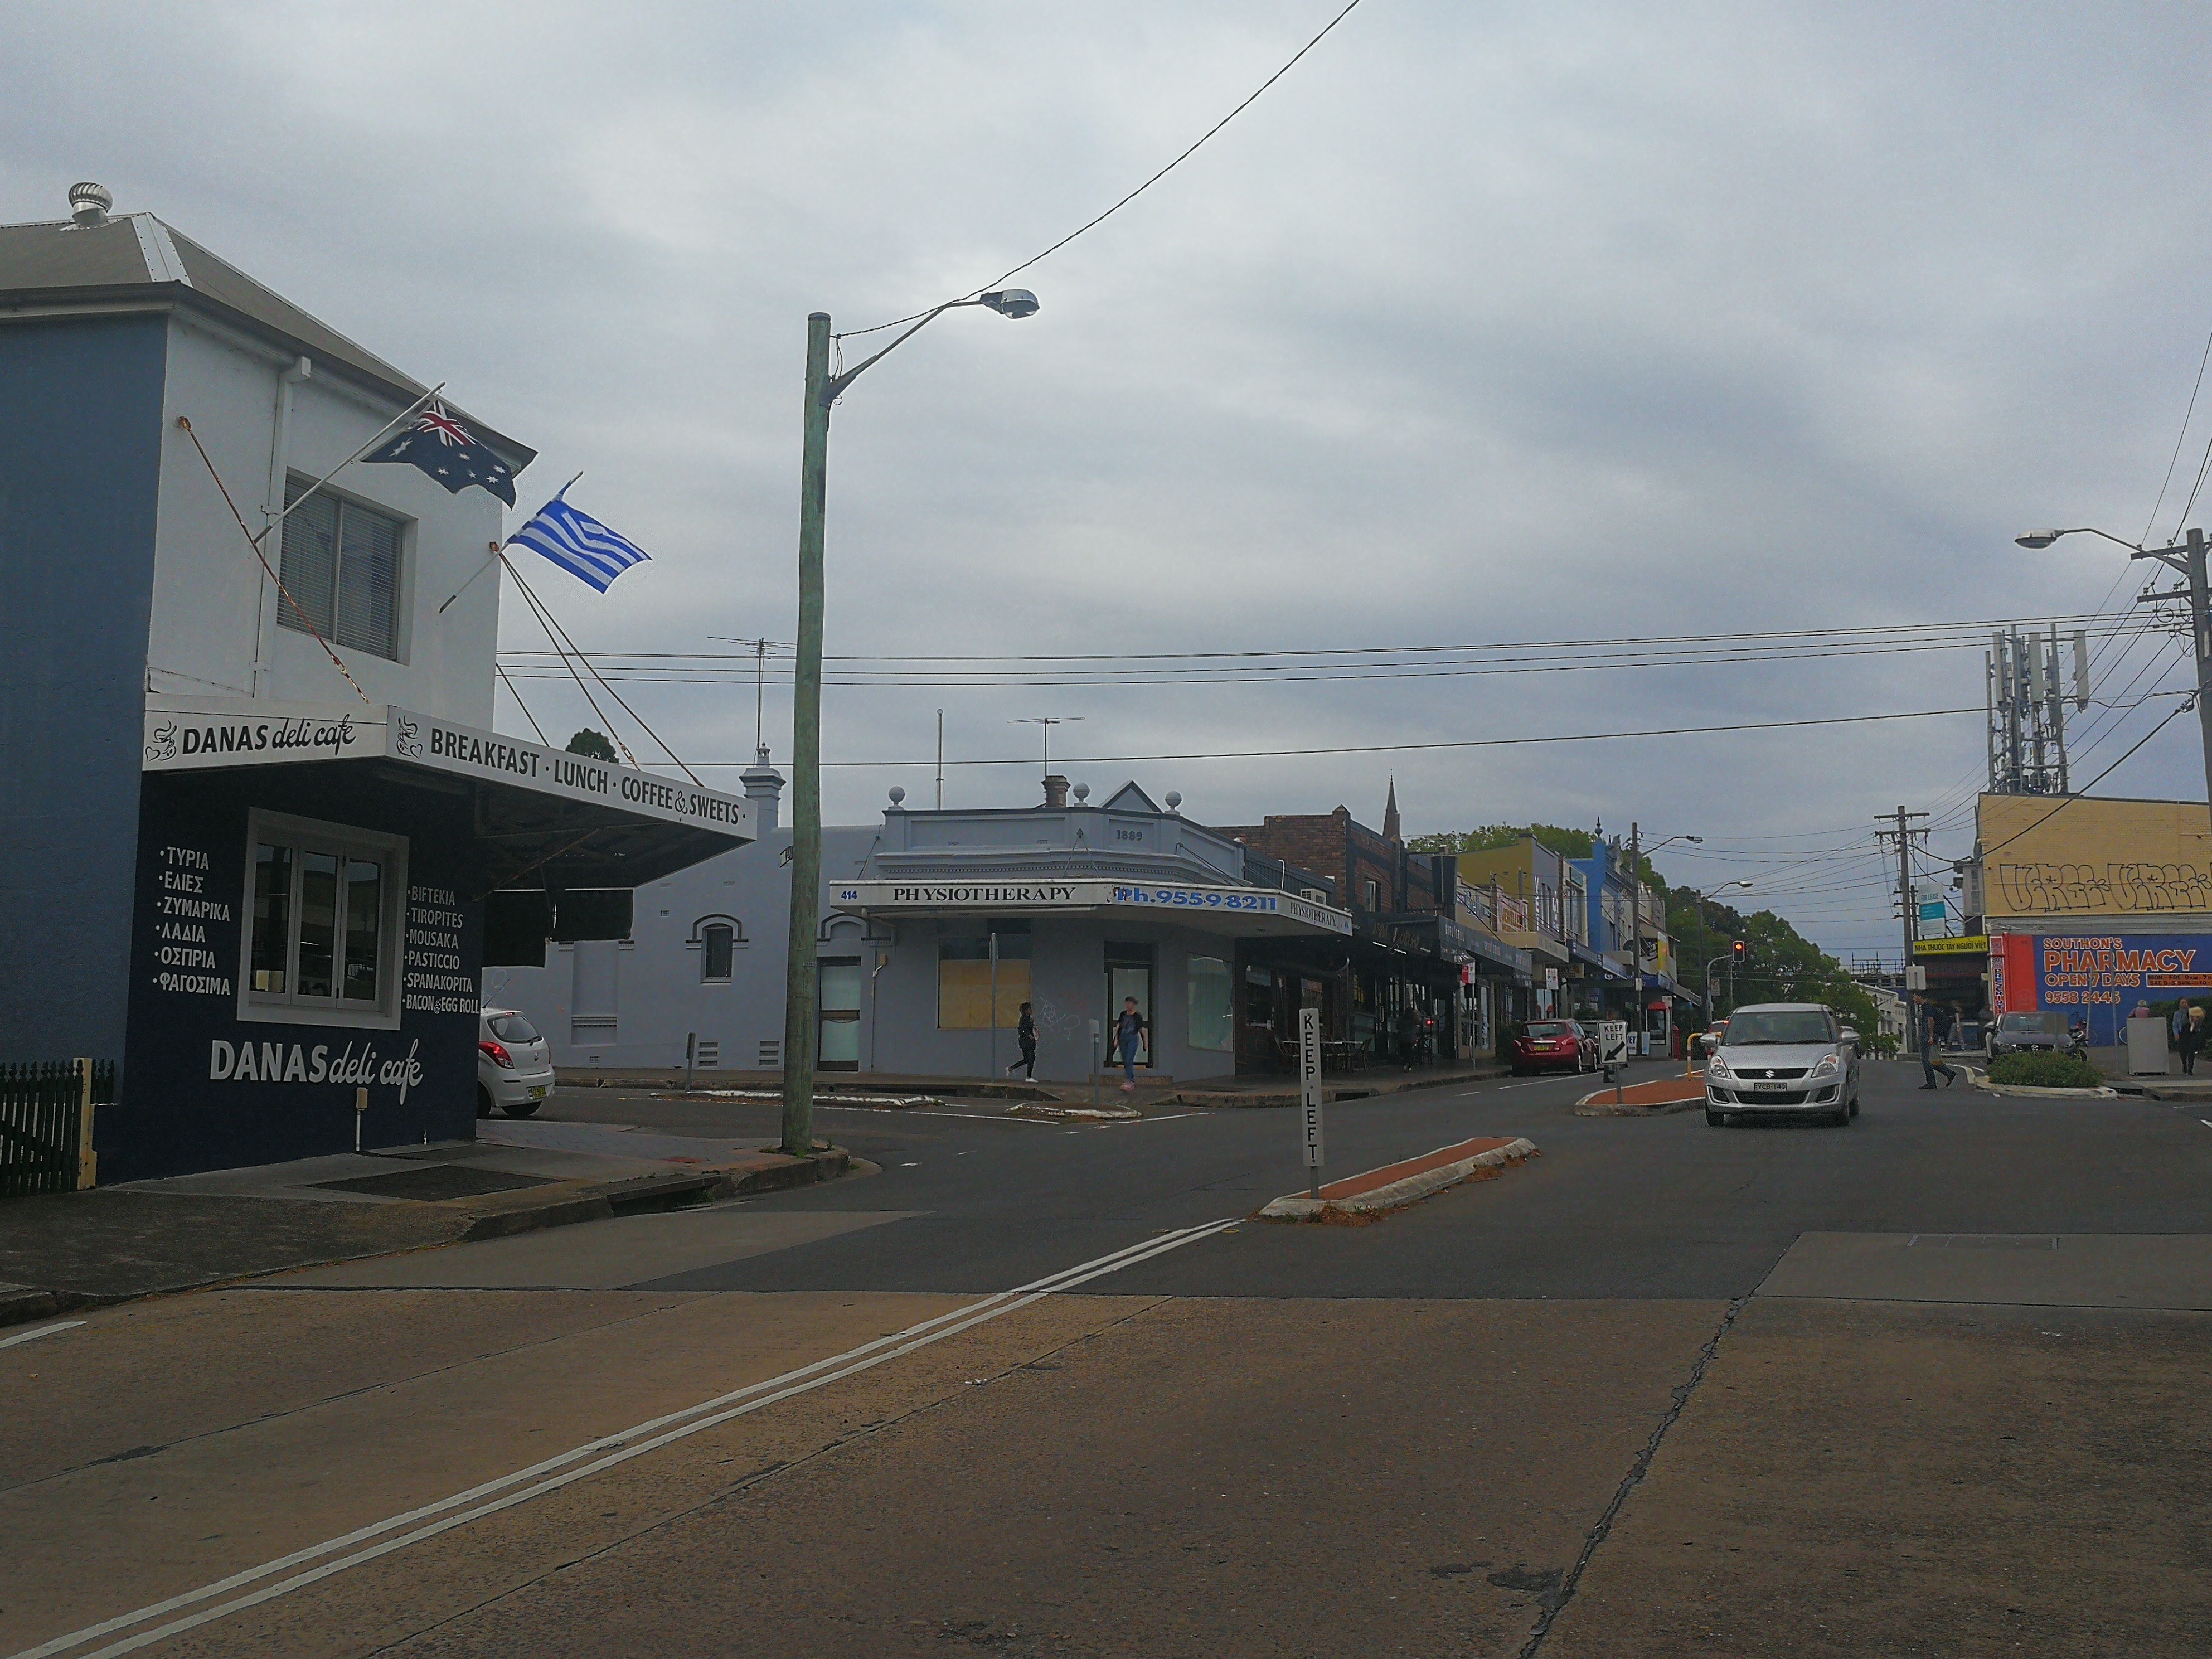 Illawarra rd, Danas Delil Cafe on the left. Image: Christopher Kelly